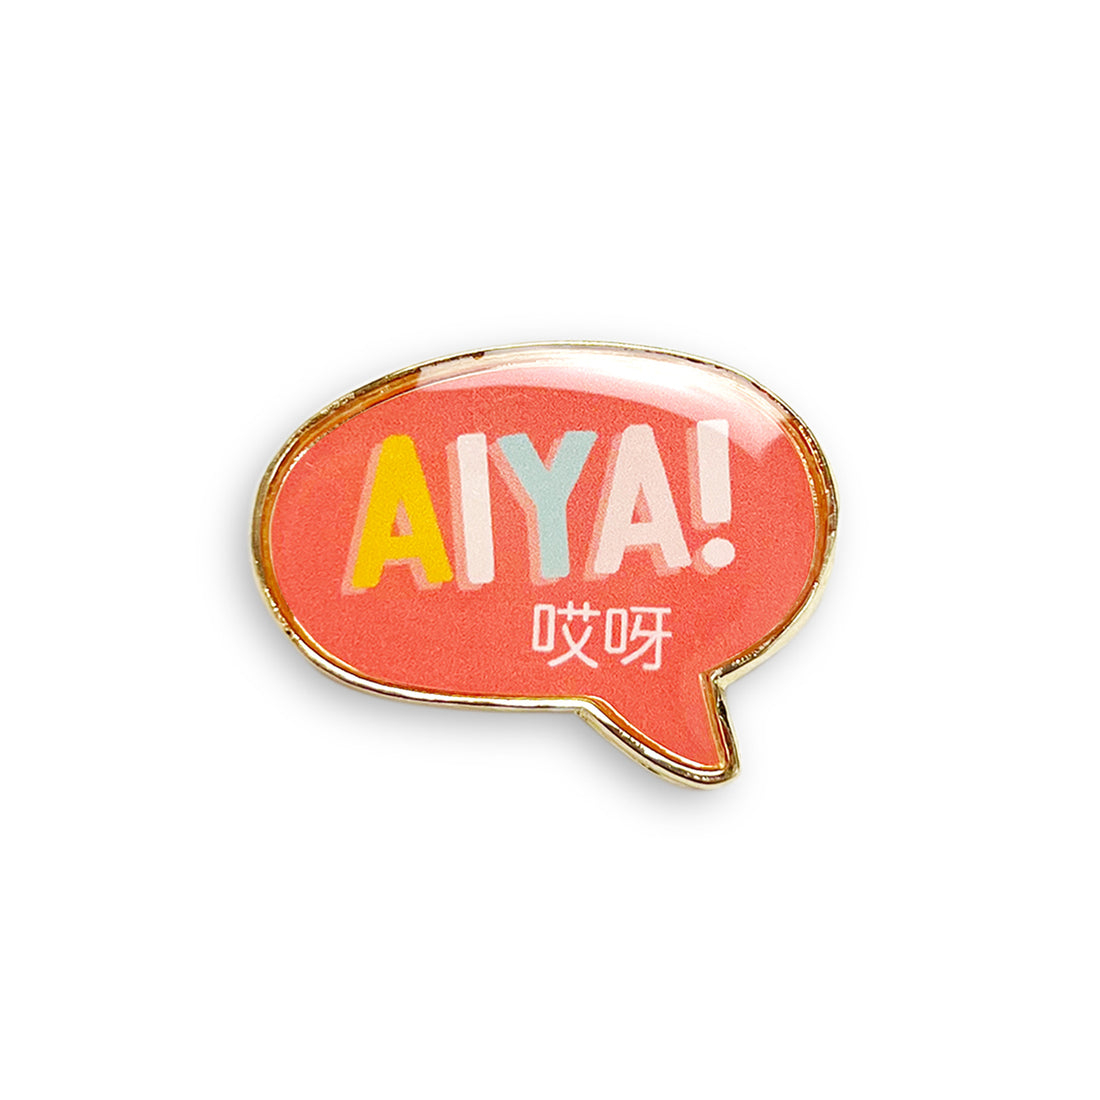 Aiya 哎呀 lapel pin by I&